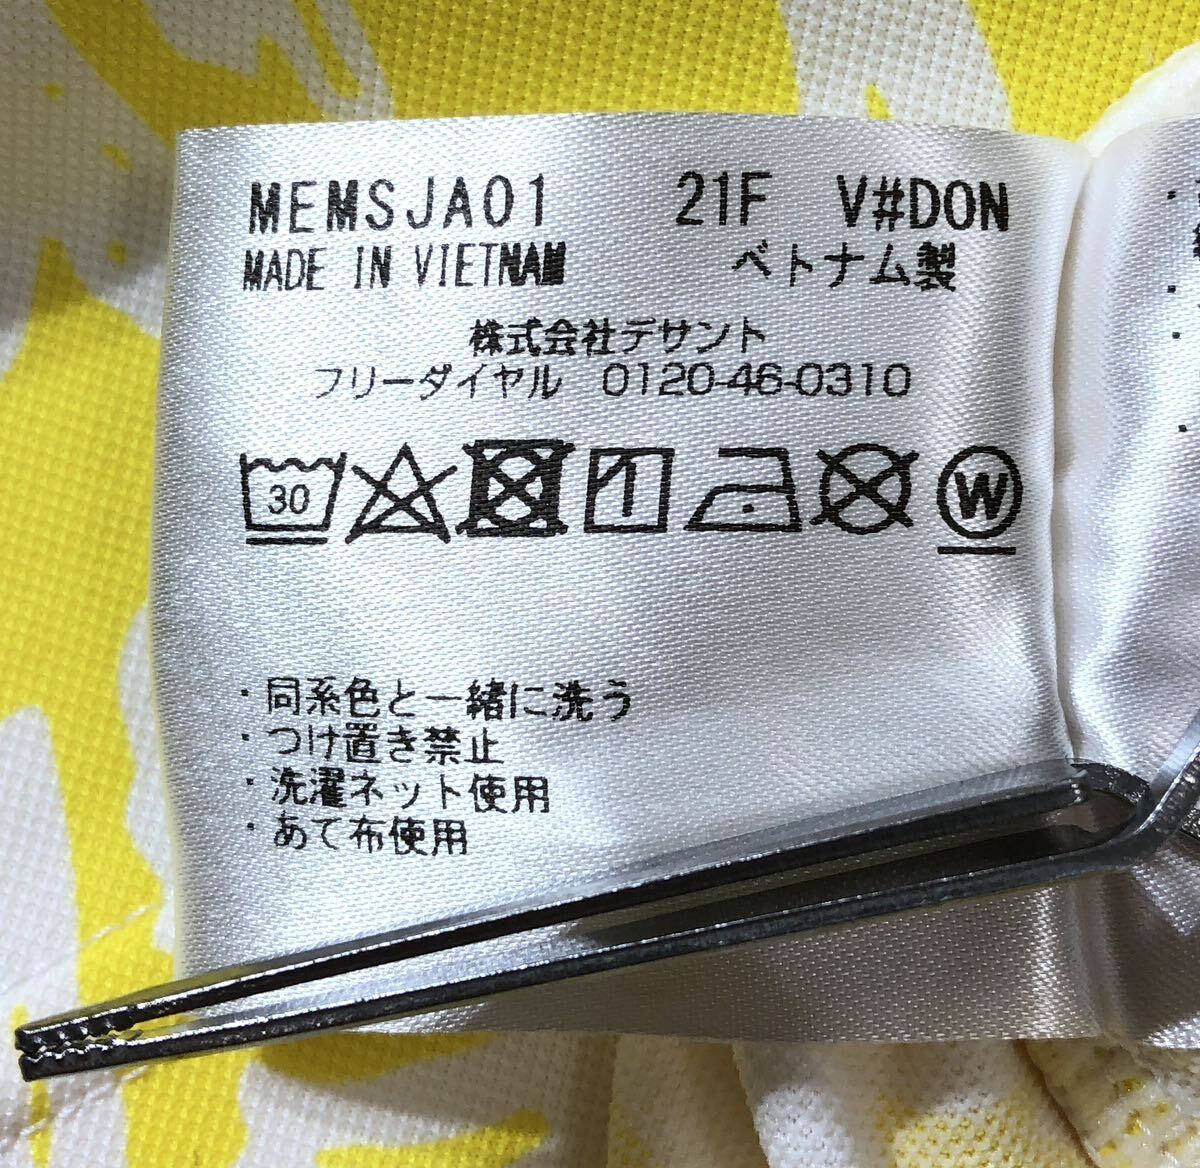  large size * Munsingwear Munsingwear wear * Logo label total pattern Golf polo-shirt yellow × white LL